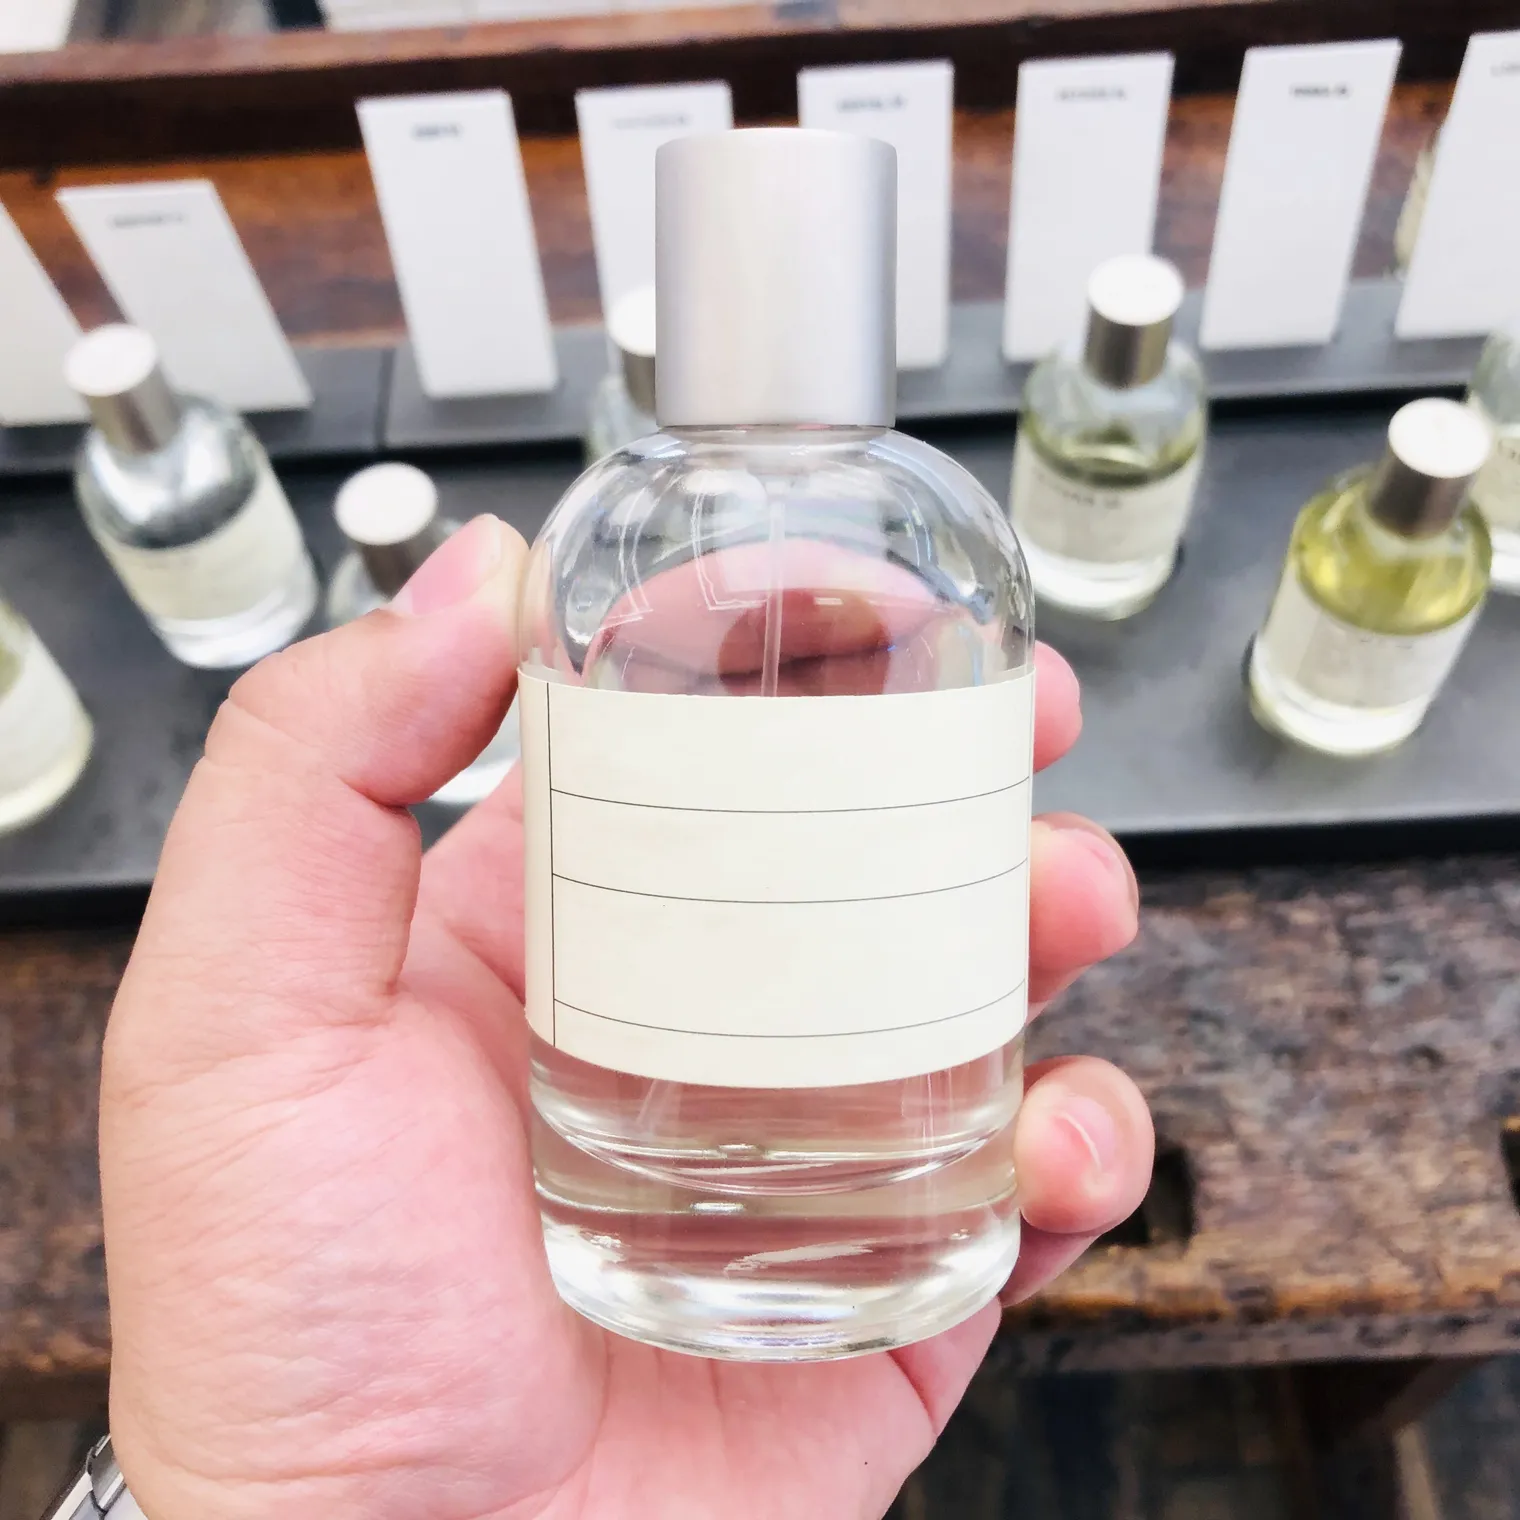 High Quality Neutral Fragrance: 100ml Santal Rose Gaiac Another Home  Fragrance, Long Lasting Eau De Parfum For Men And Women, Unisex Spray  Cologne From Brandskincare, $17.82